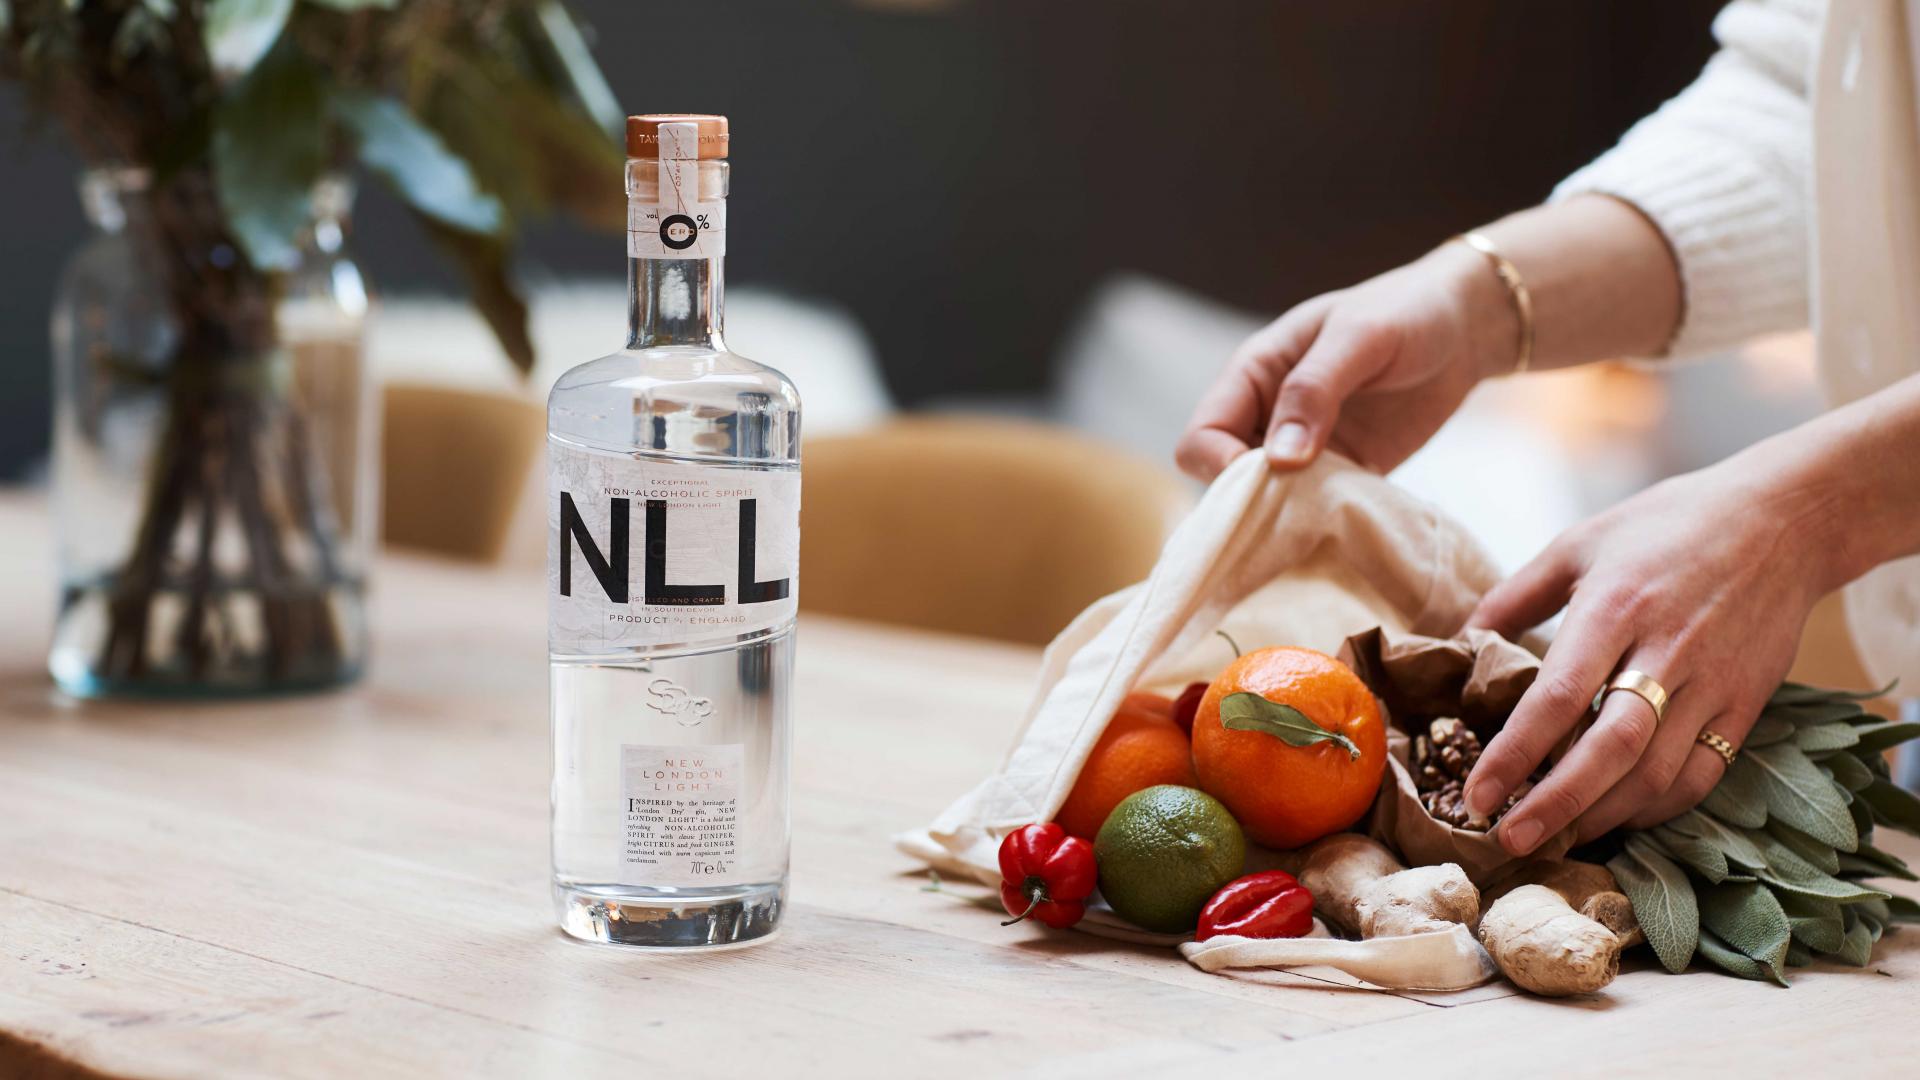 Non-alcoholic spirits: Salcombe Distilling Co New London Light